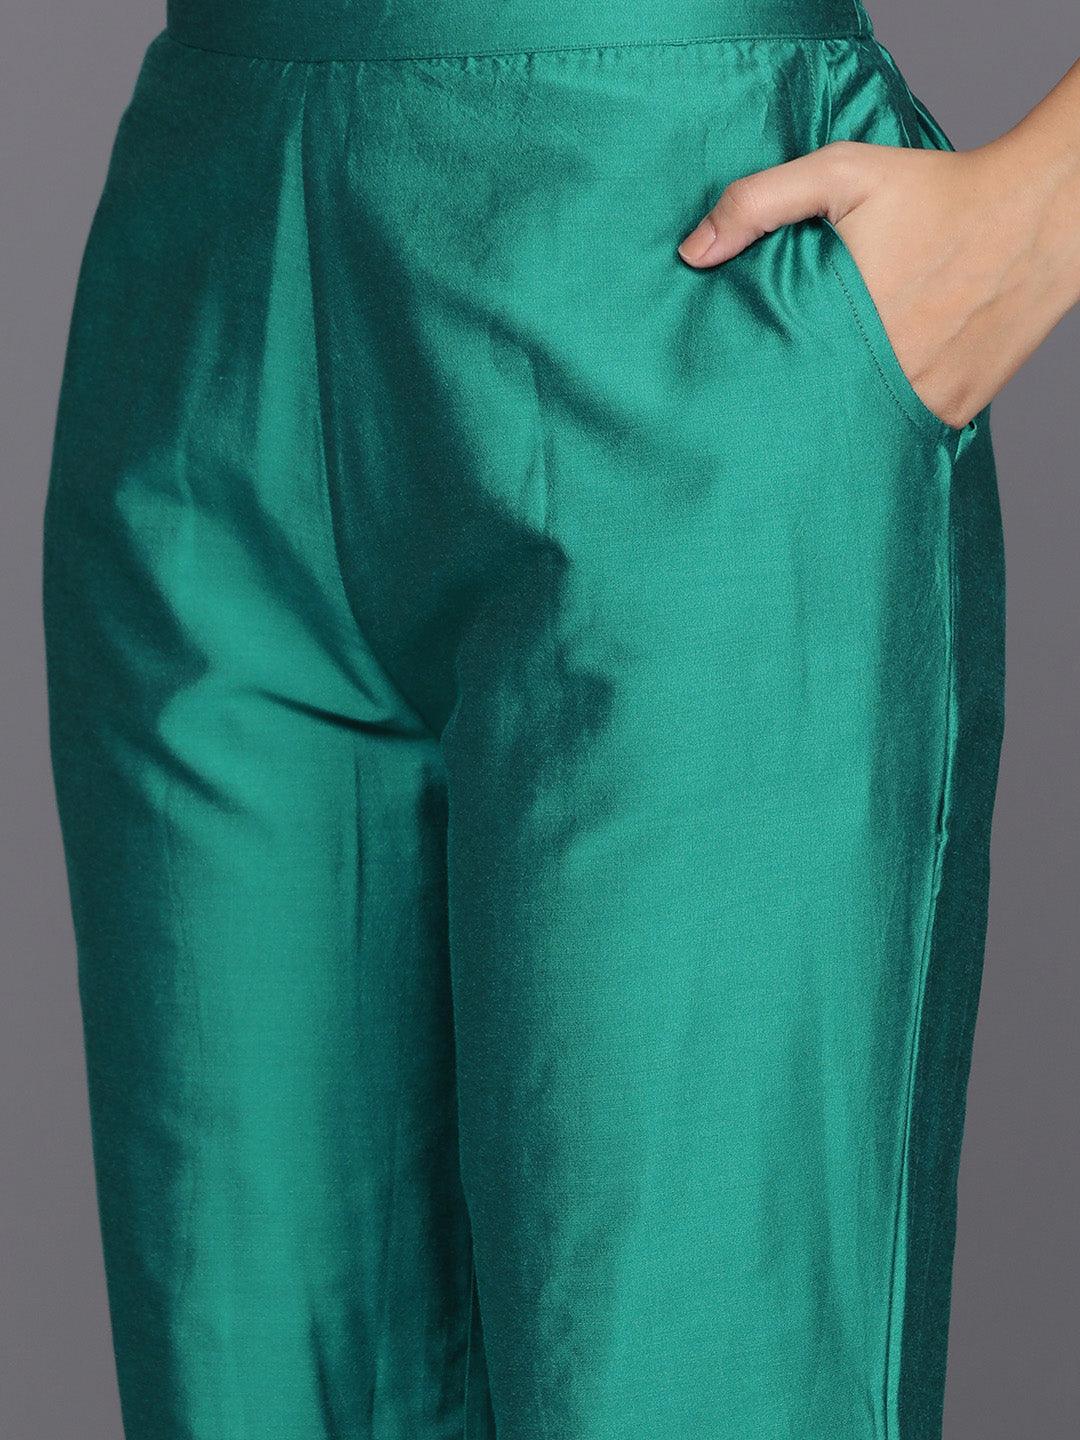 Green Yoke Design Silk Blend Straight Kurta With Trousers & Dupatta - Libas